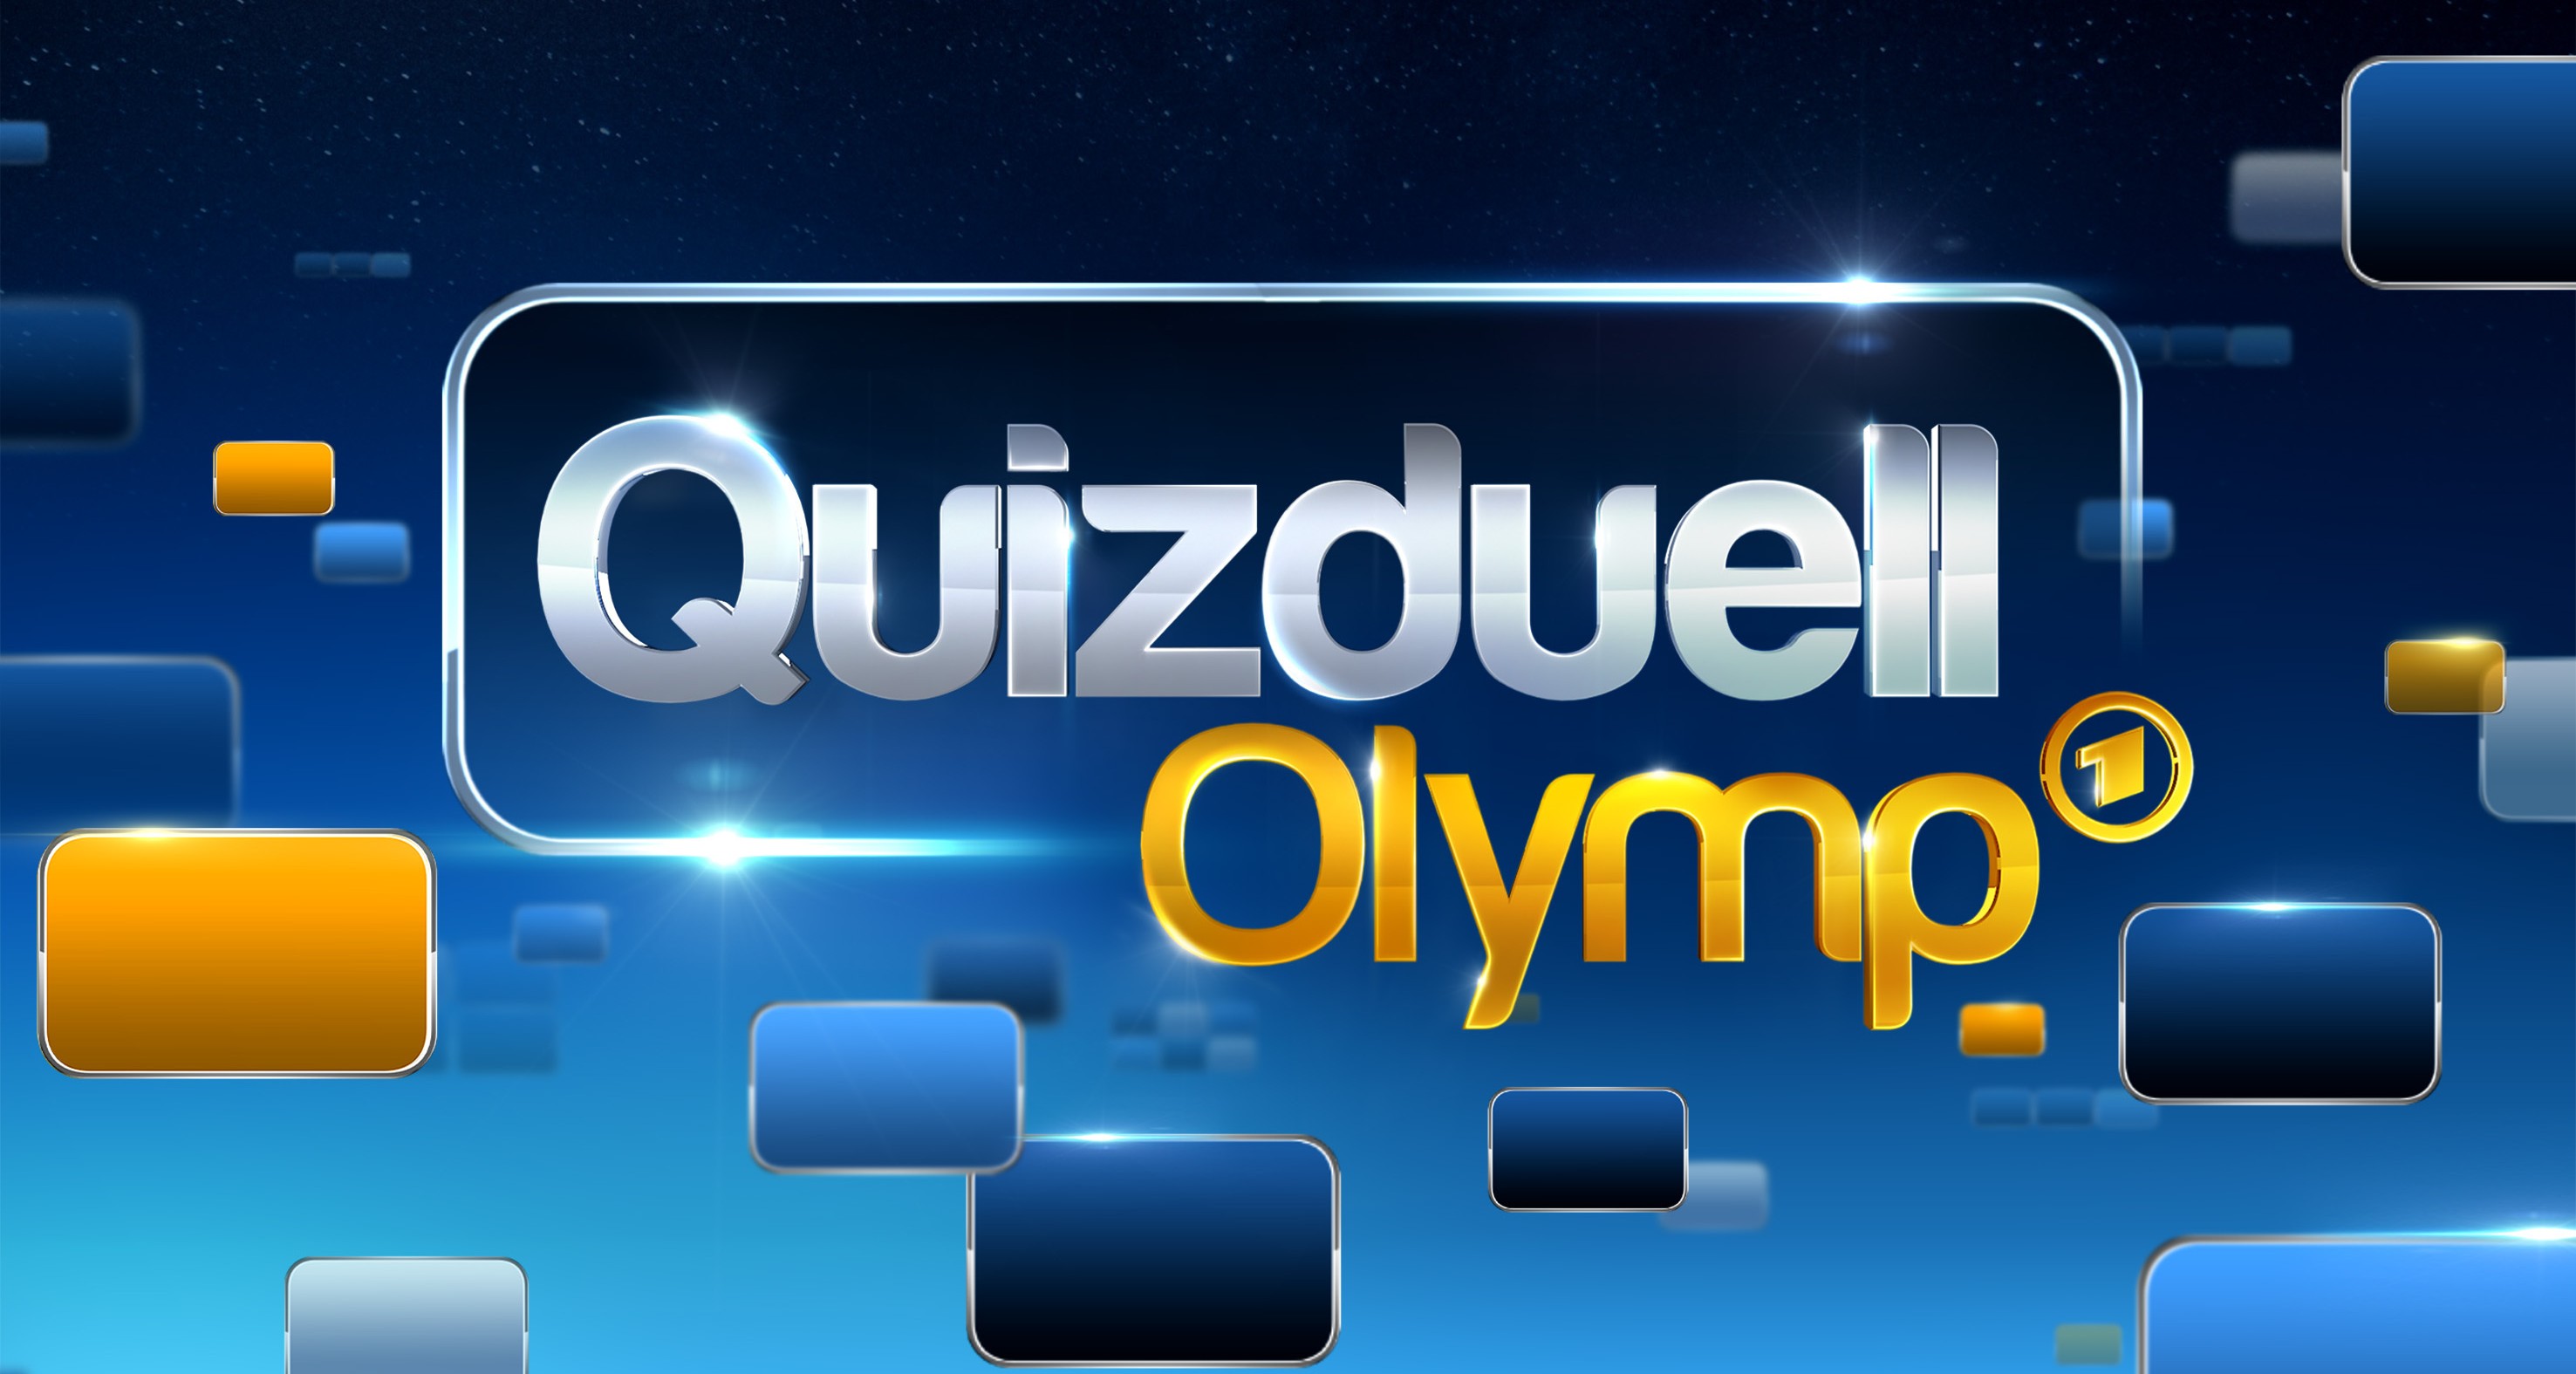 Quizduell (TV Series 2014– ) - IMDb